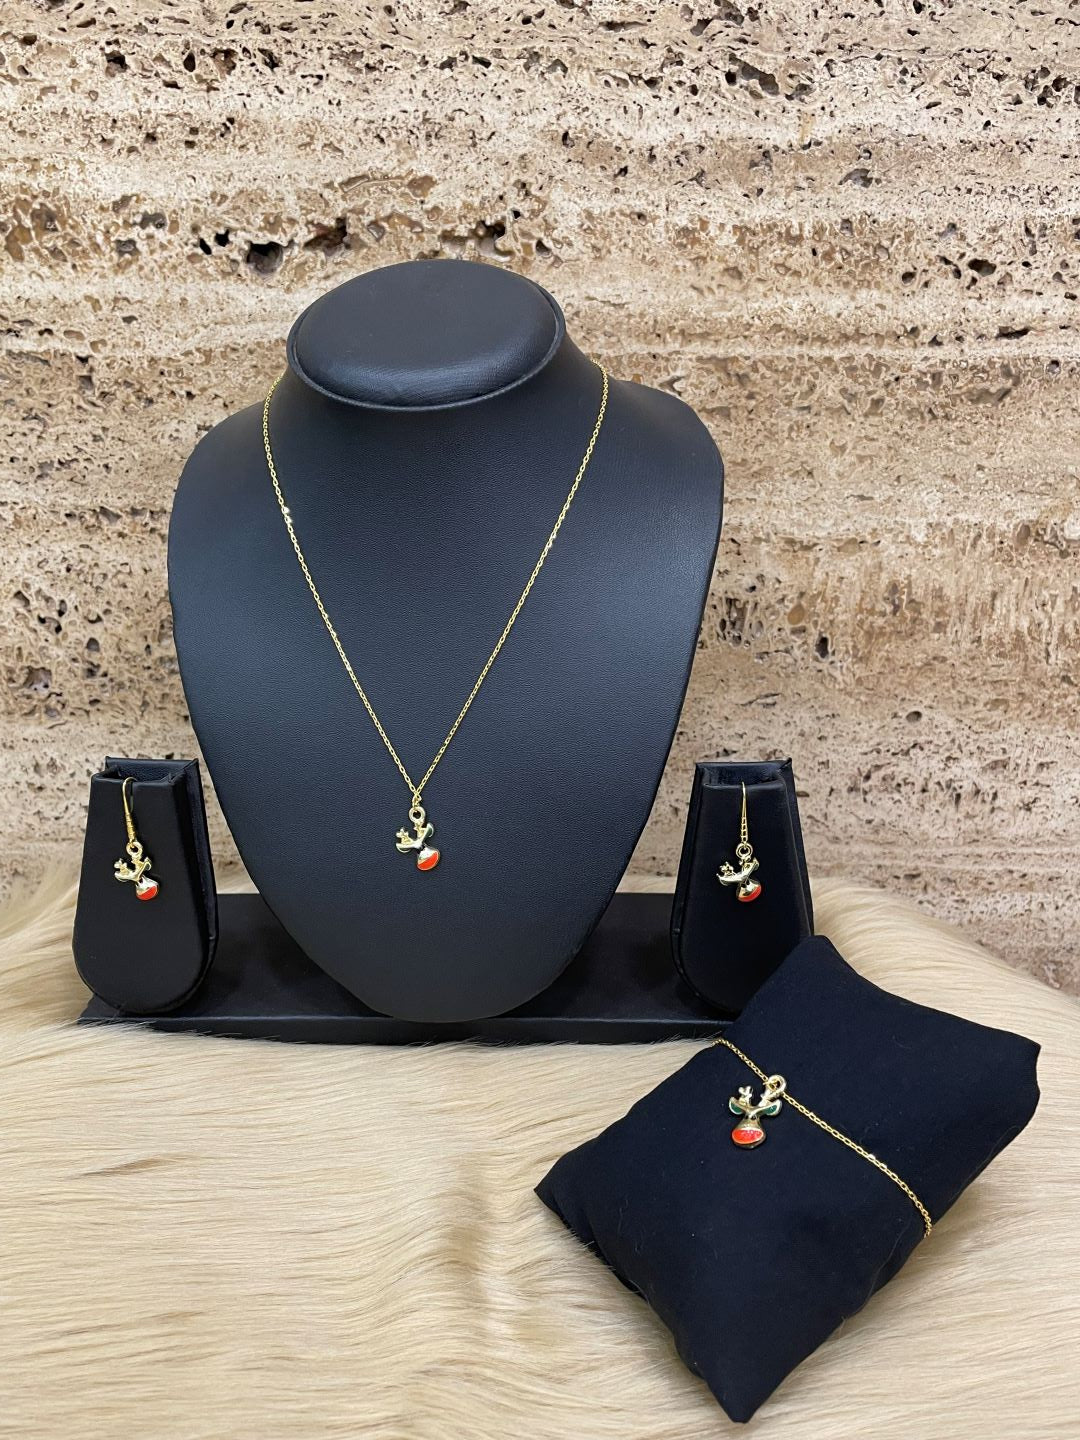 Lotus Black layered beaded necklace earring set gemstone jewelry at ₹2550 |  Azilaa